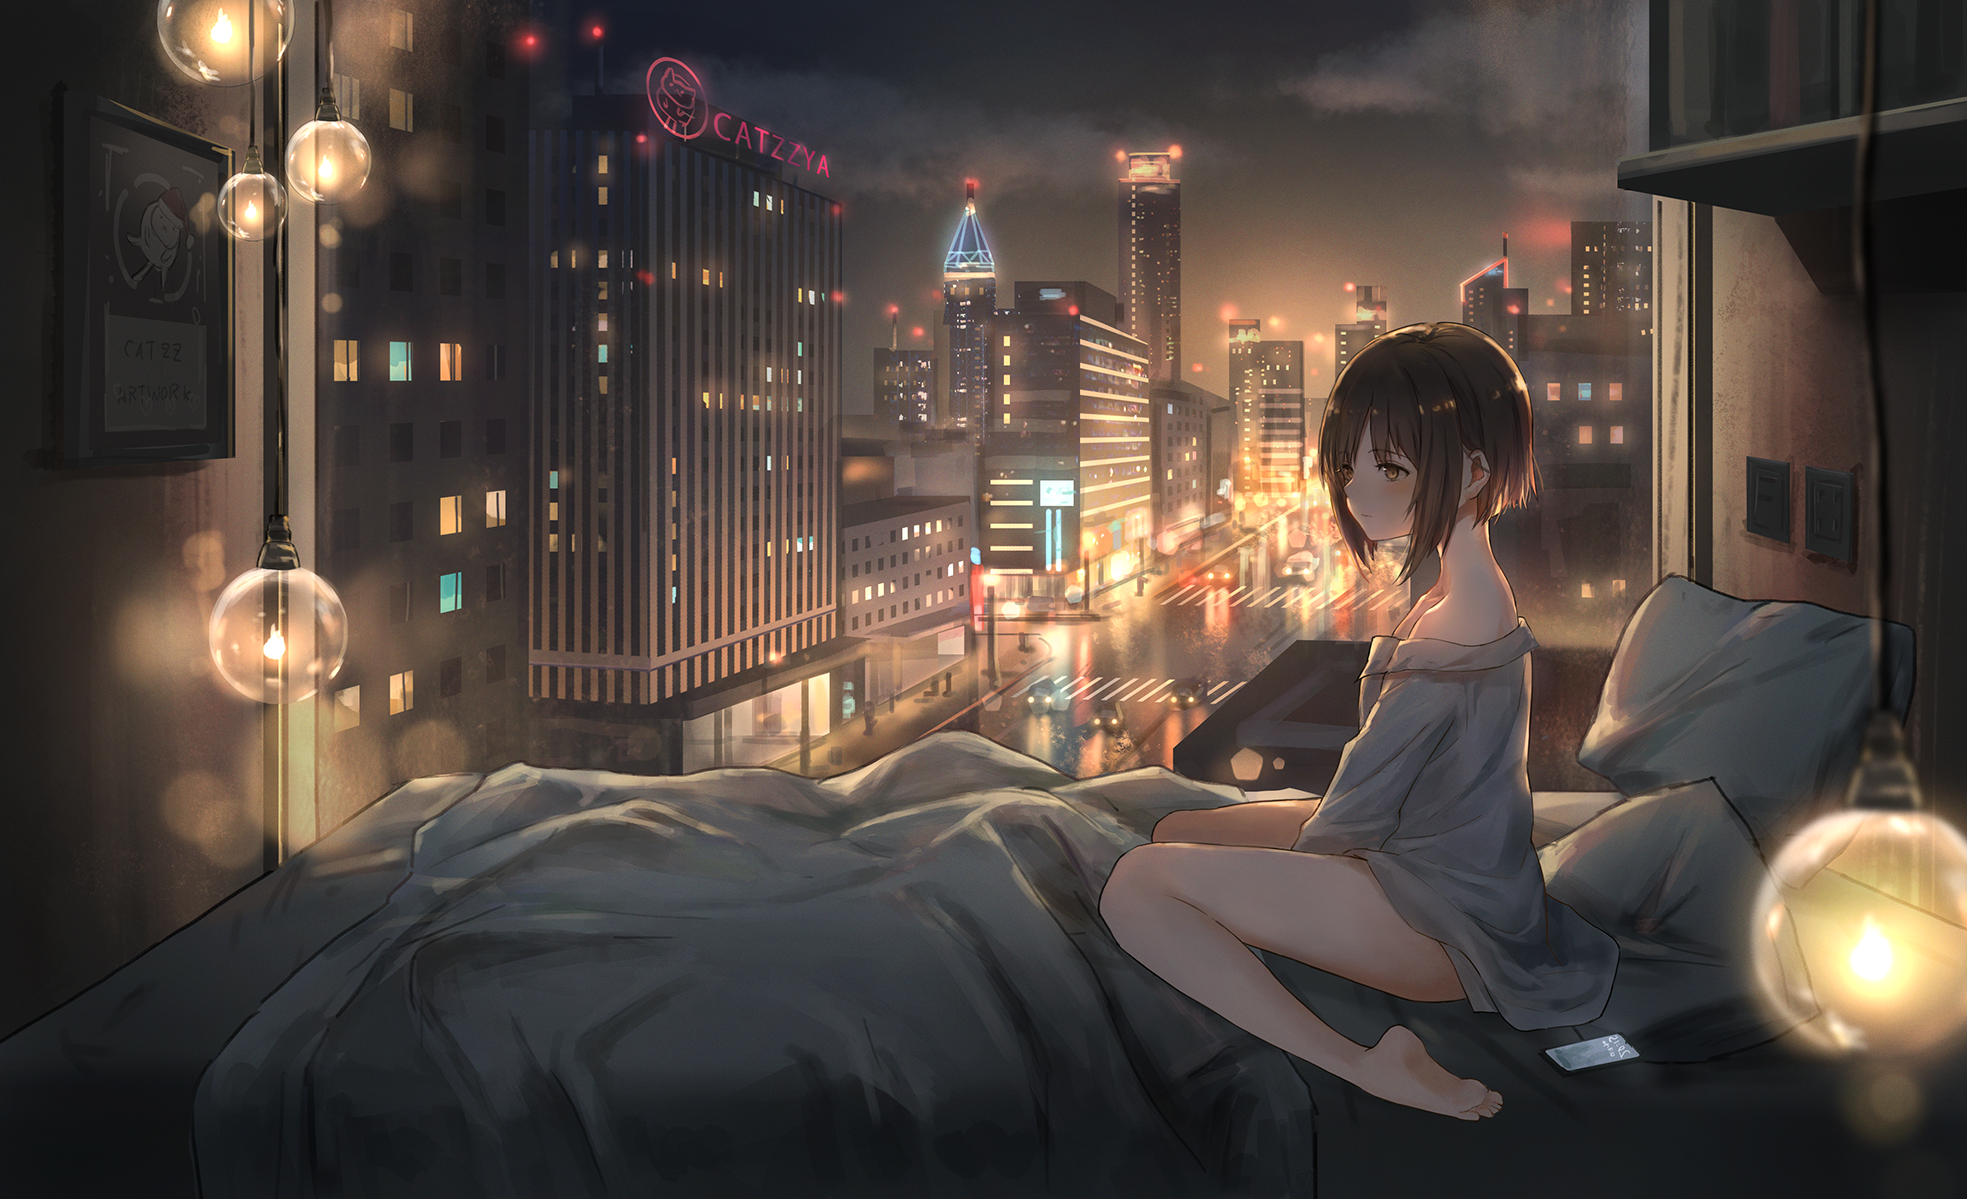 Wallpaper ID 131279 anime night city lights city bed catzz